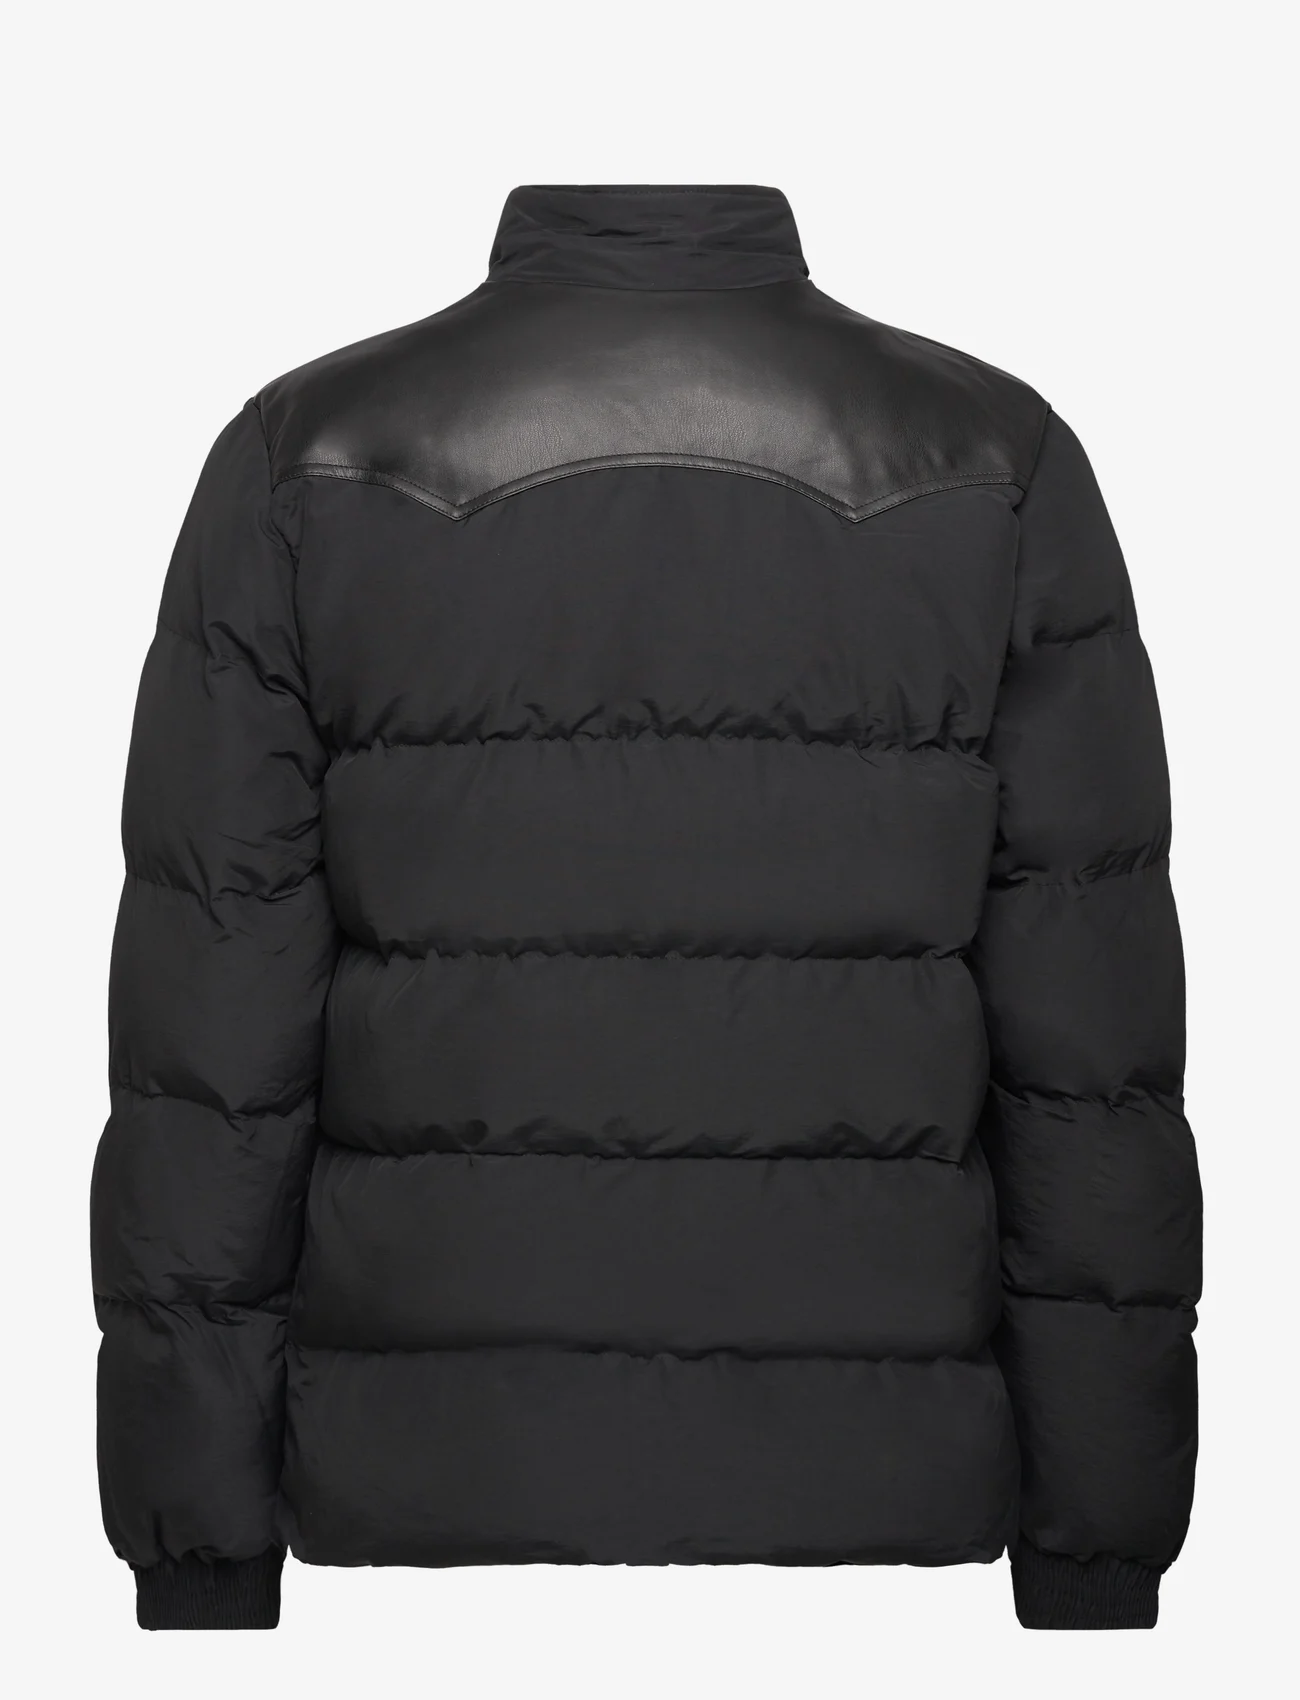 Penfield - Pellam Jacket - vestes matelassées - black - 1